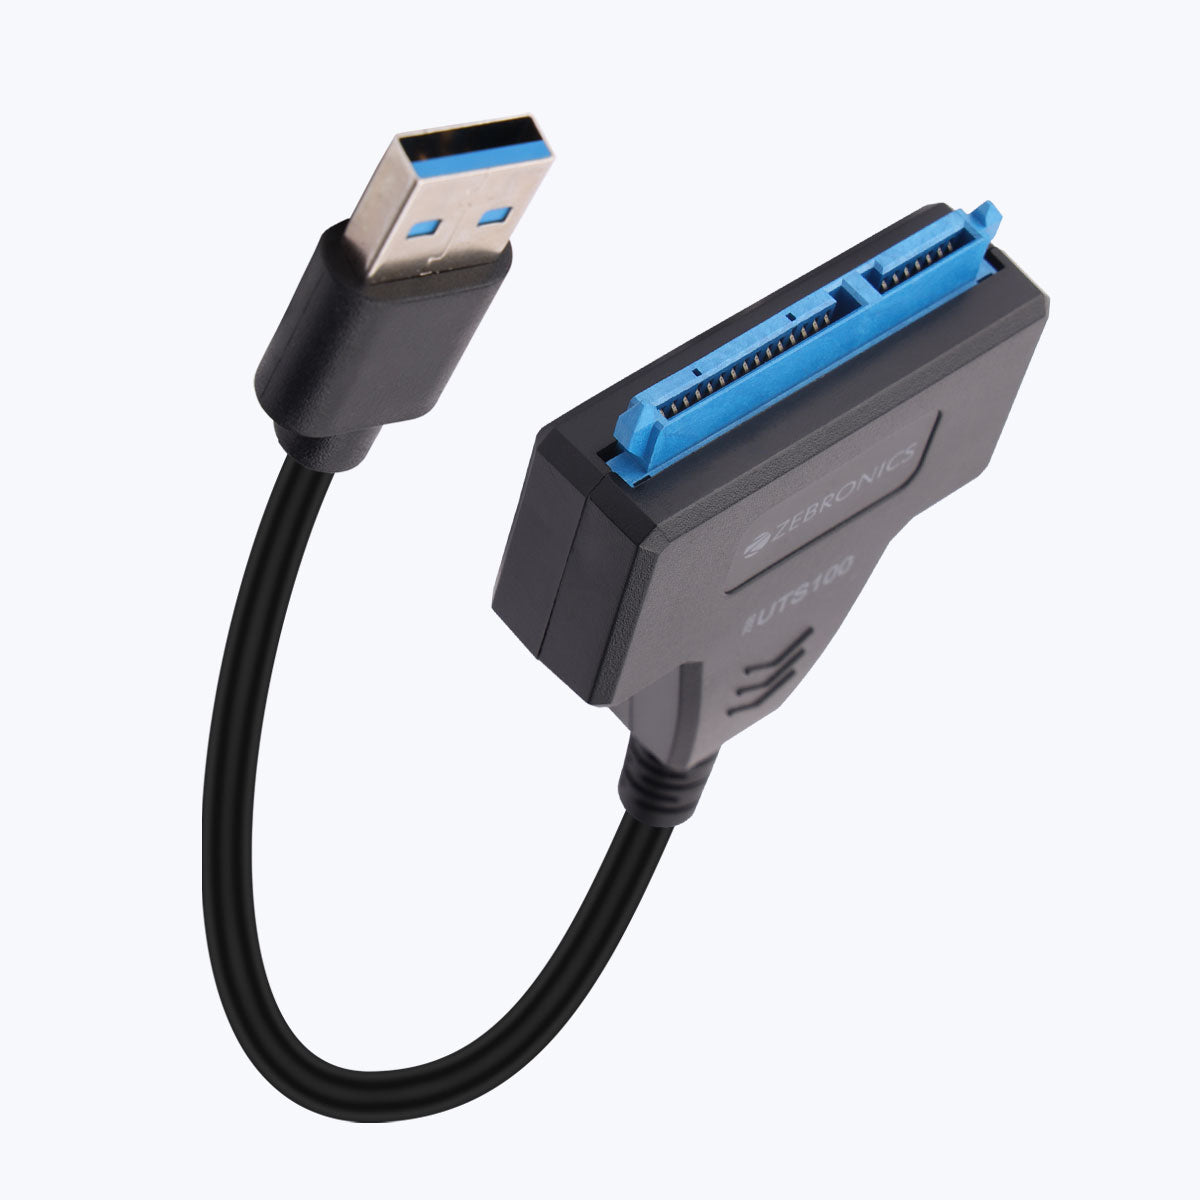 Zeb-UTS100 - USB 3.0 to SATA Cable - Zebronics